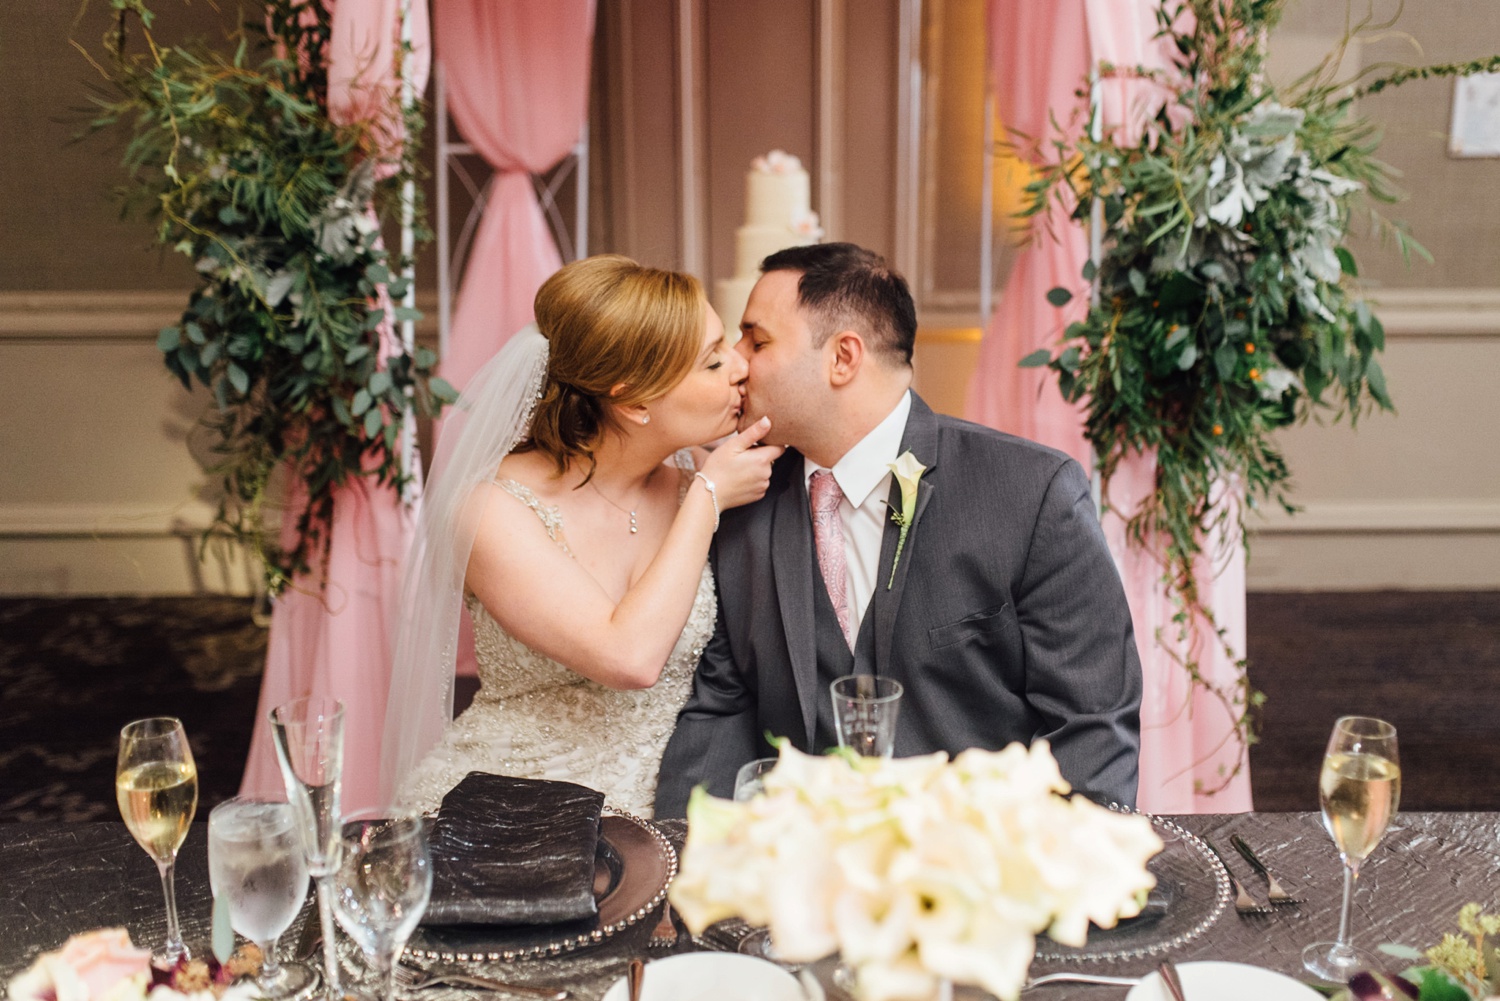 Lisa + Lou - The Logan Hotel Wedding - Philadelphia Wedding Photographer - Alison Dunn Photography photo